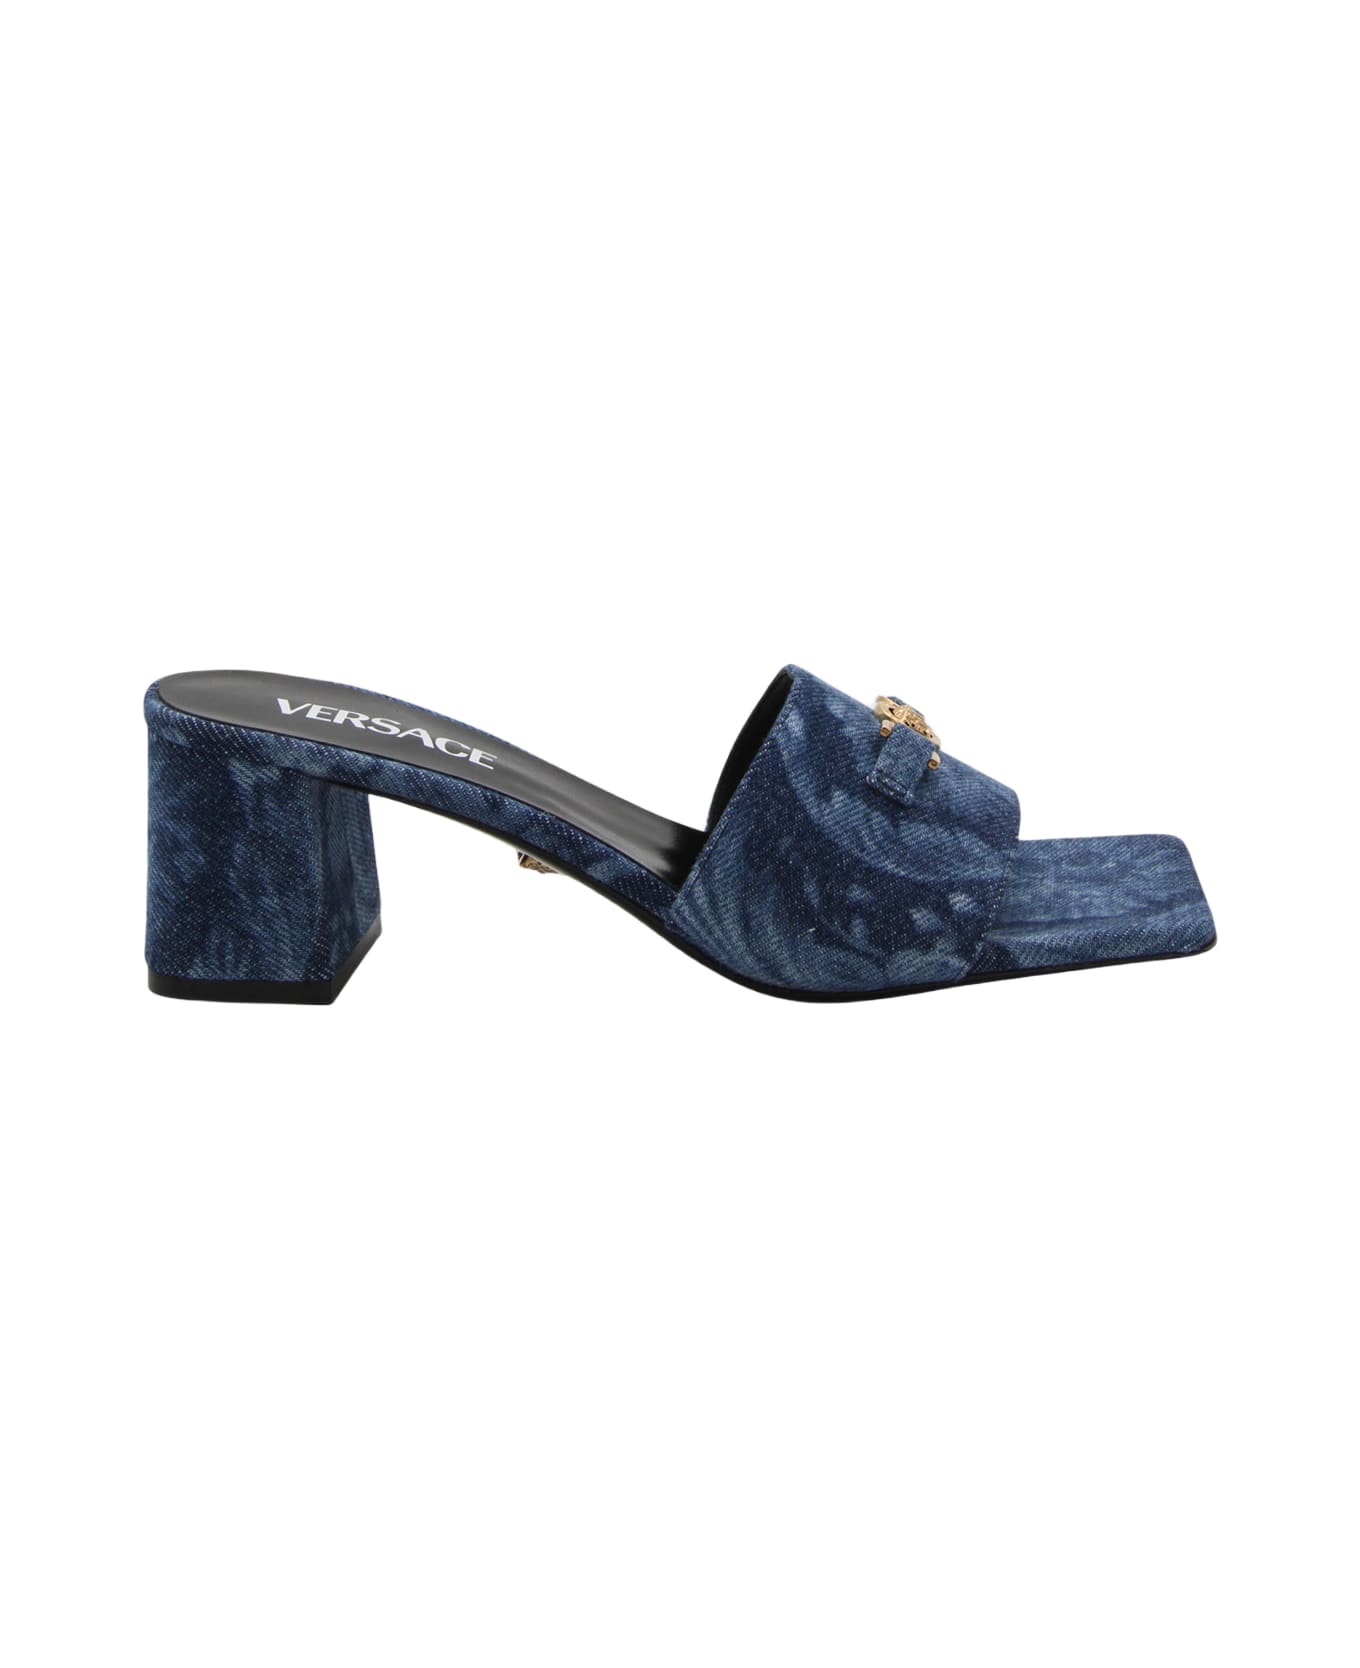 Versace Blue Denim Slippers - Denim サンダル